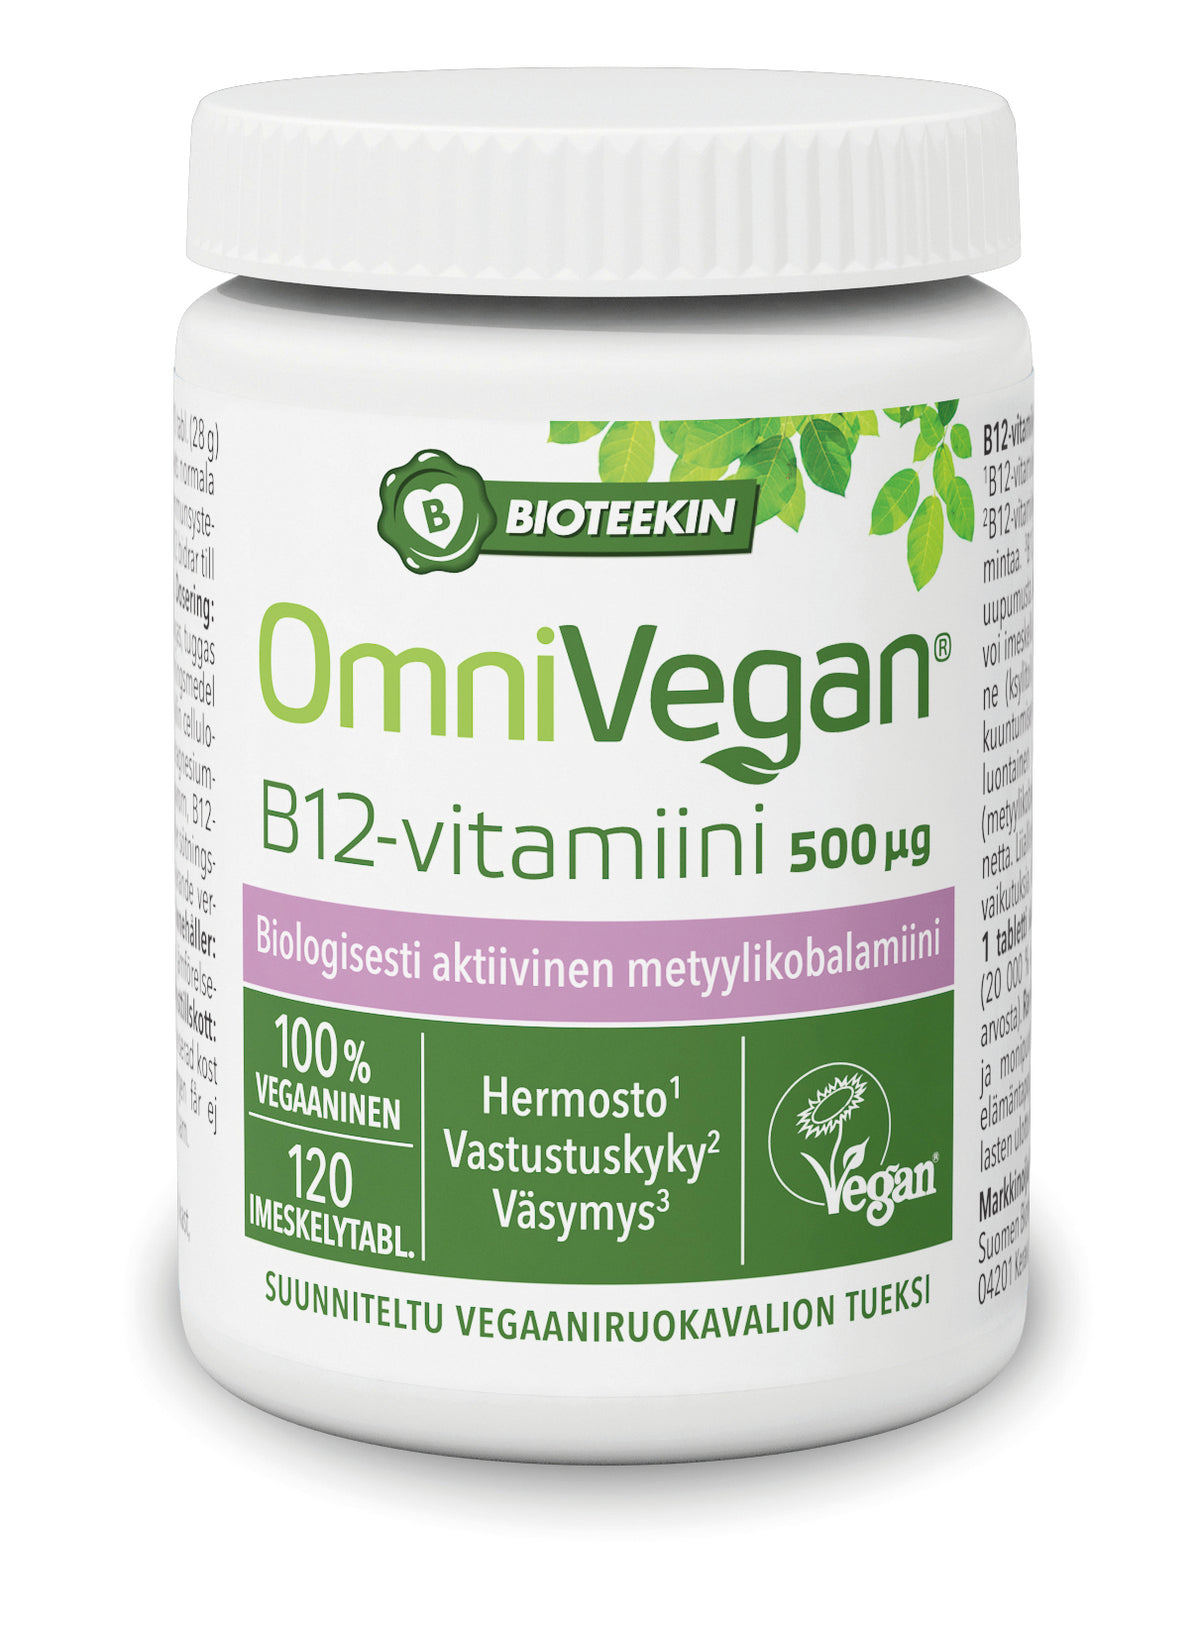 Bioteekin Omnivegan B12-vitamiini 500 μg 120 imeskelytablettia